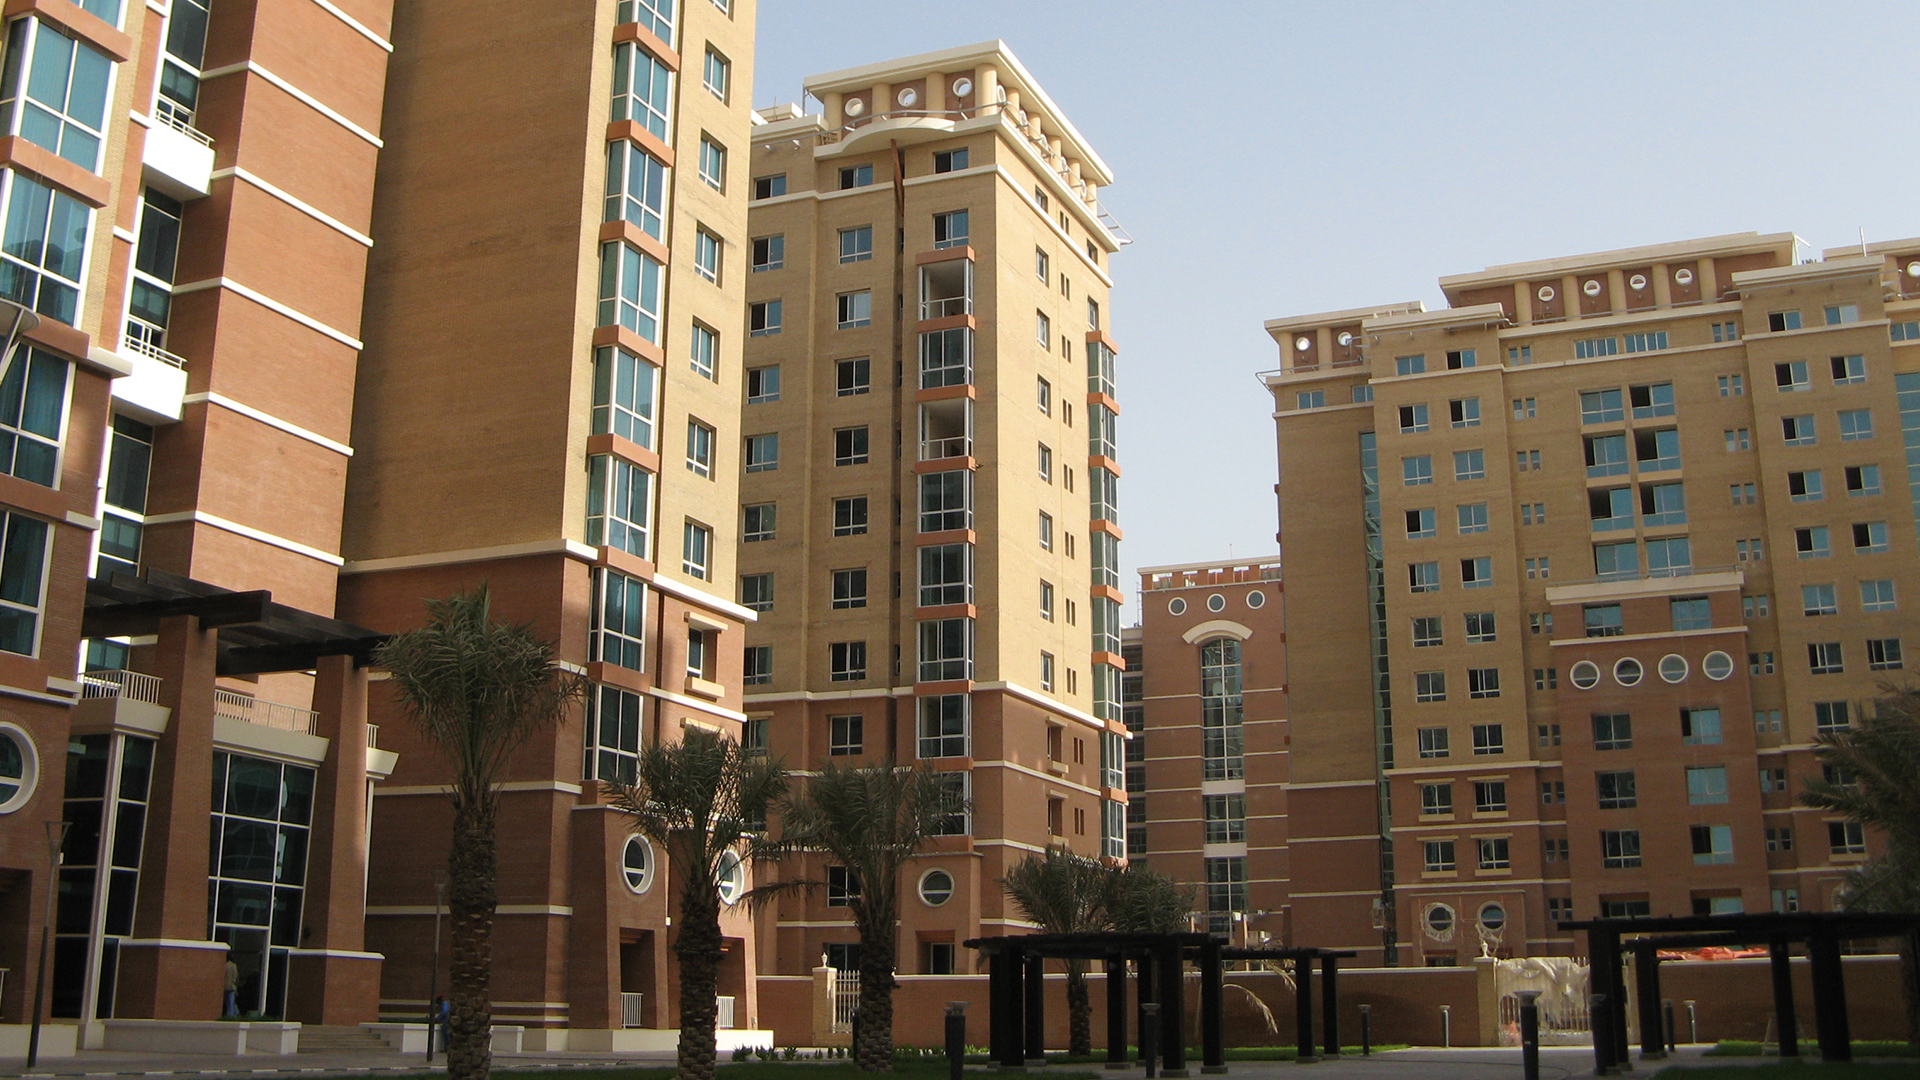 Mohammad Bin Zayed Complex